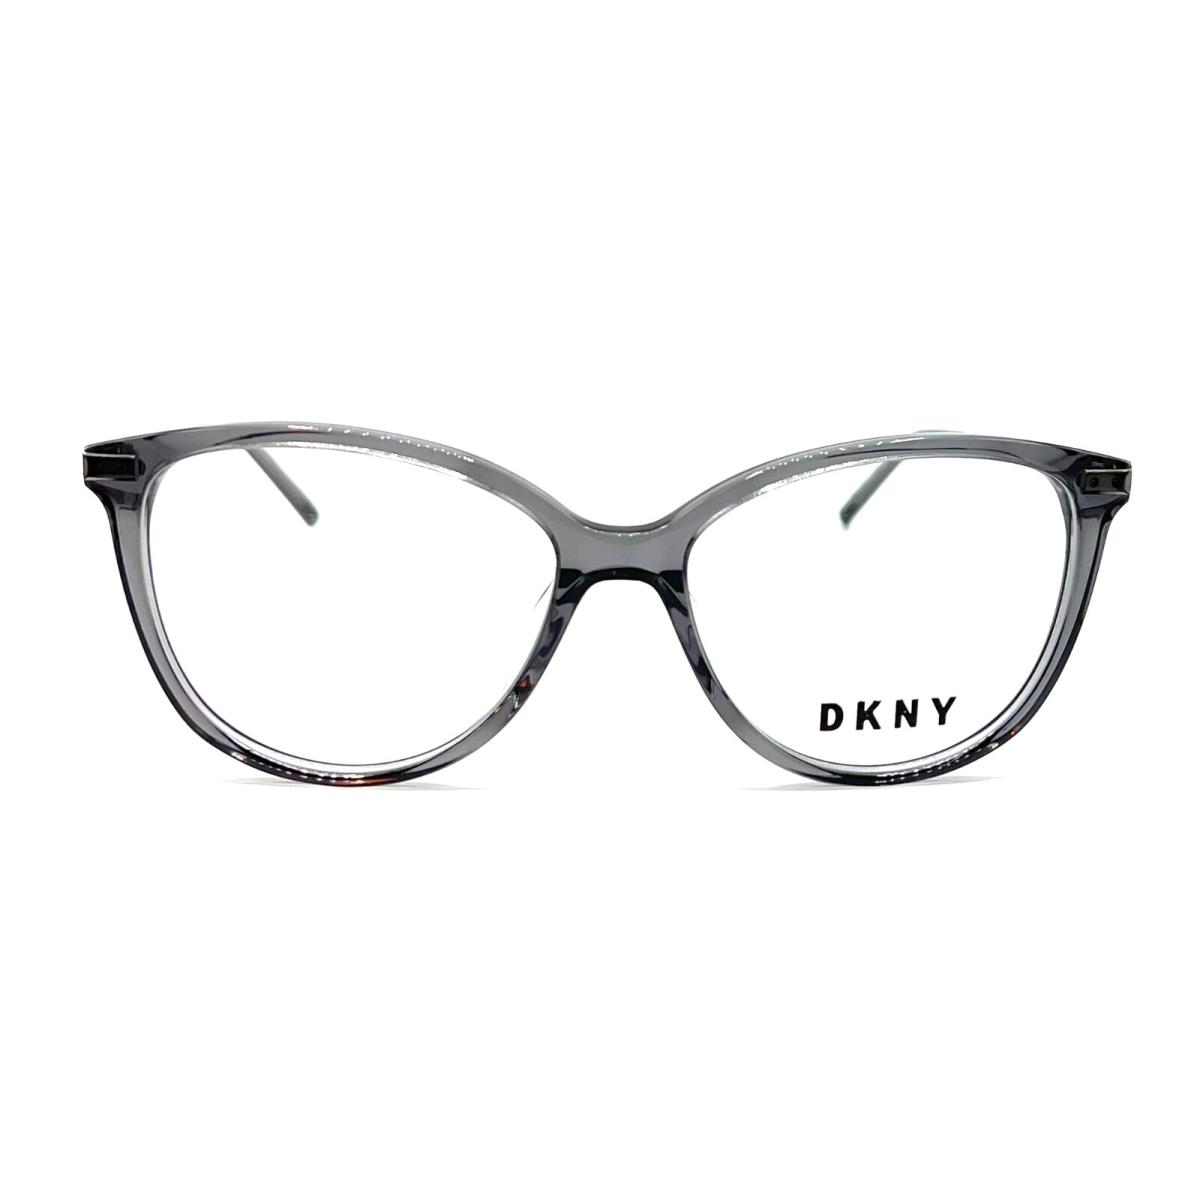 Dkny - DK7005 015 52/15/135 - Smoke Crystal - Women Eyeglasses